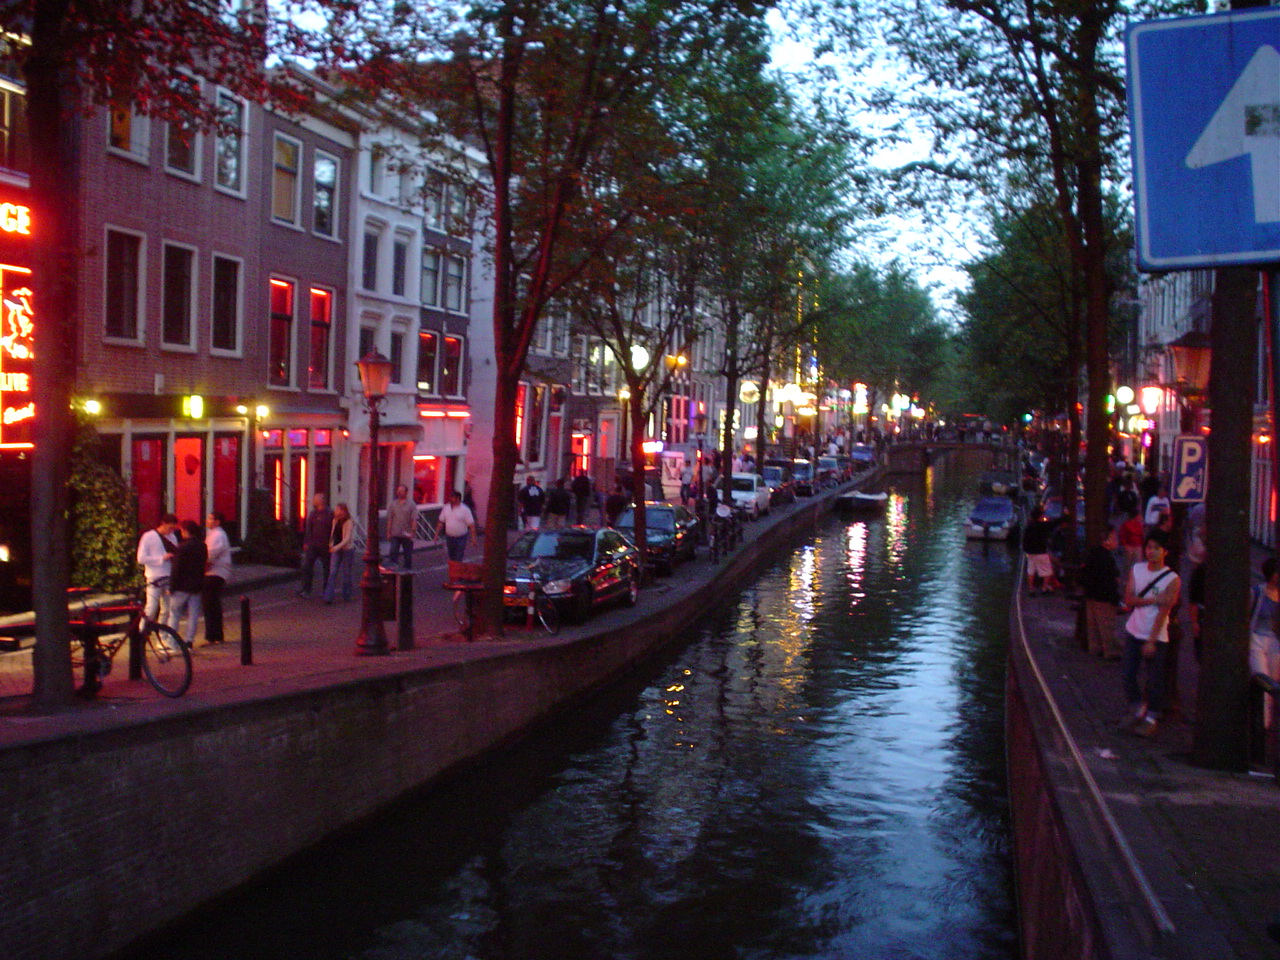 Amsterdam_red_light_district_24-7-2003.JPG